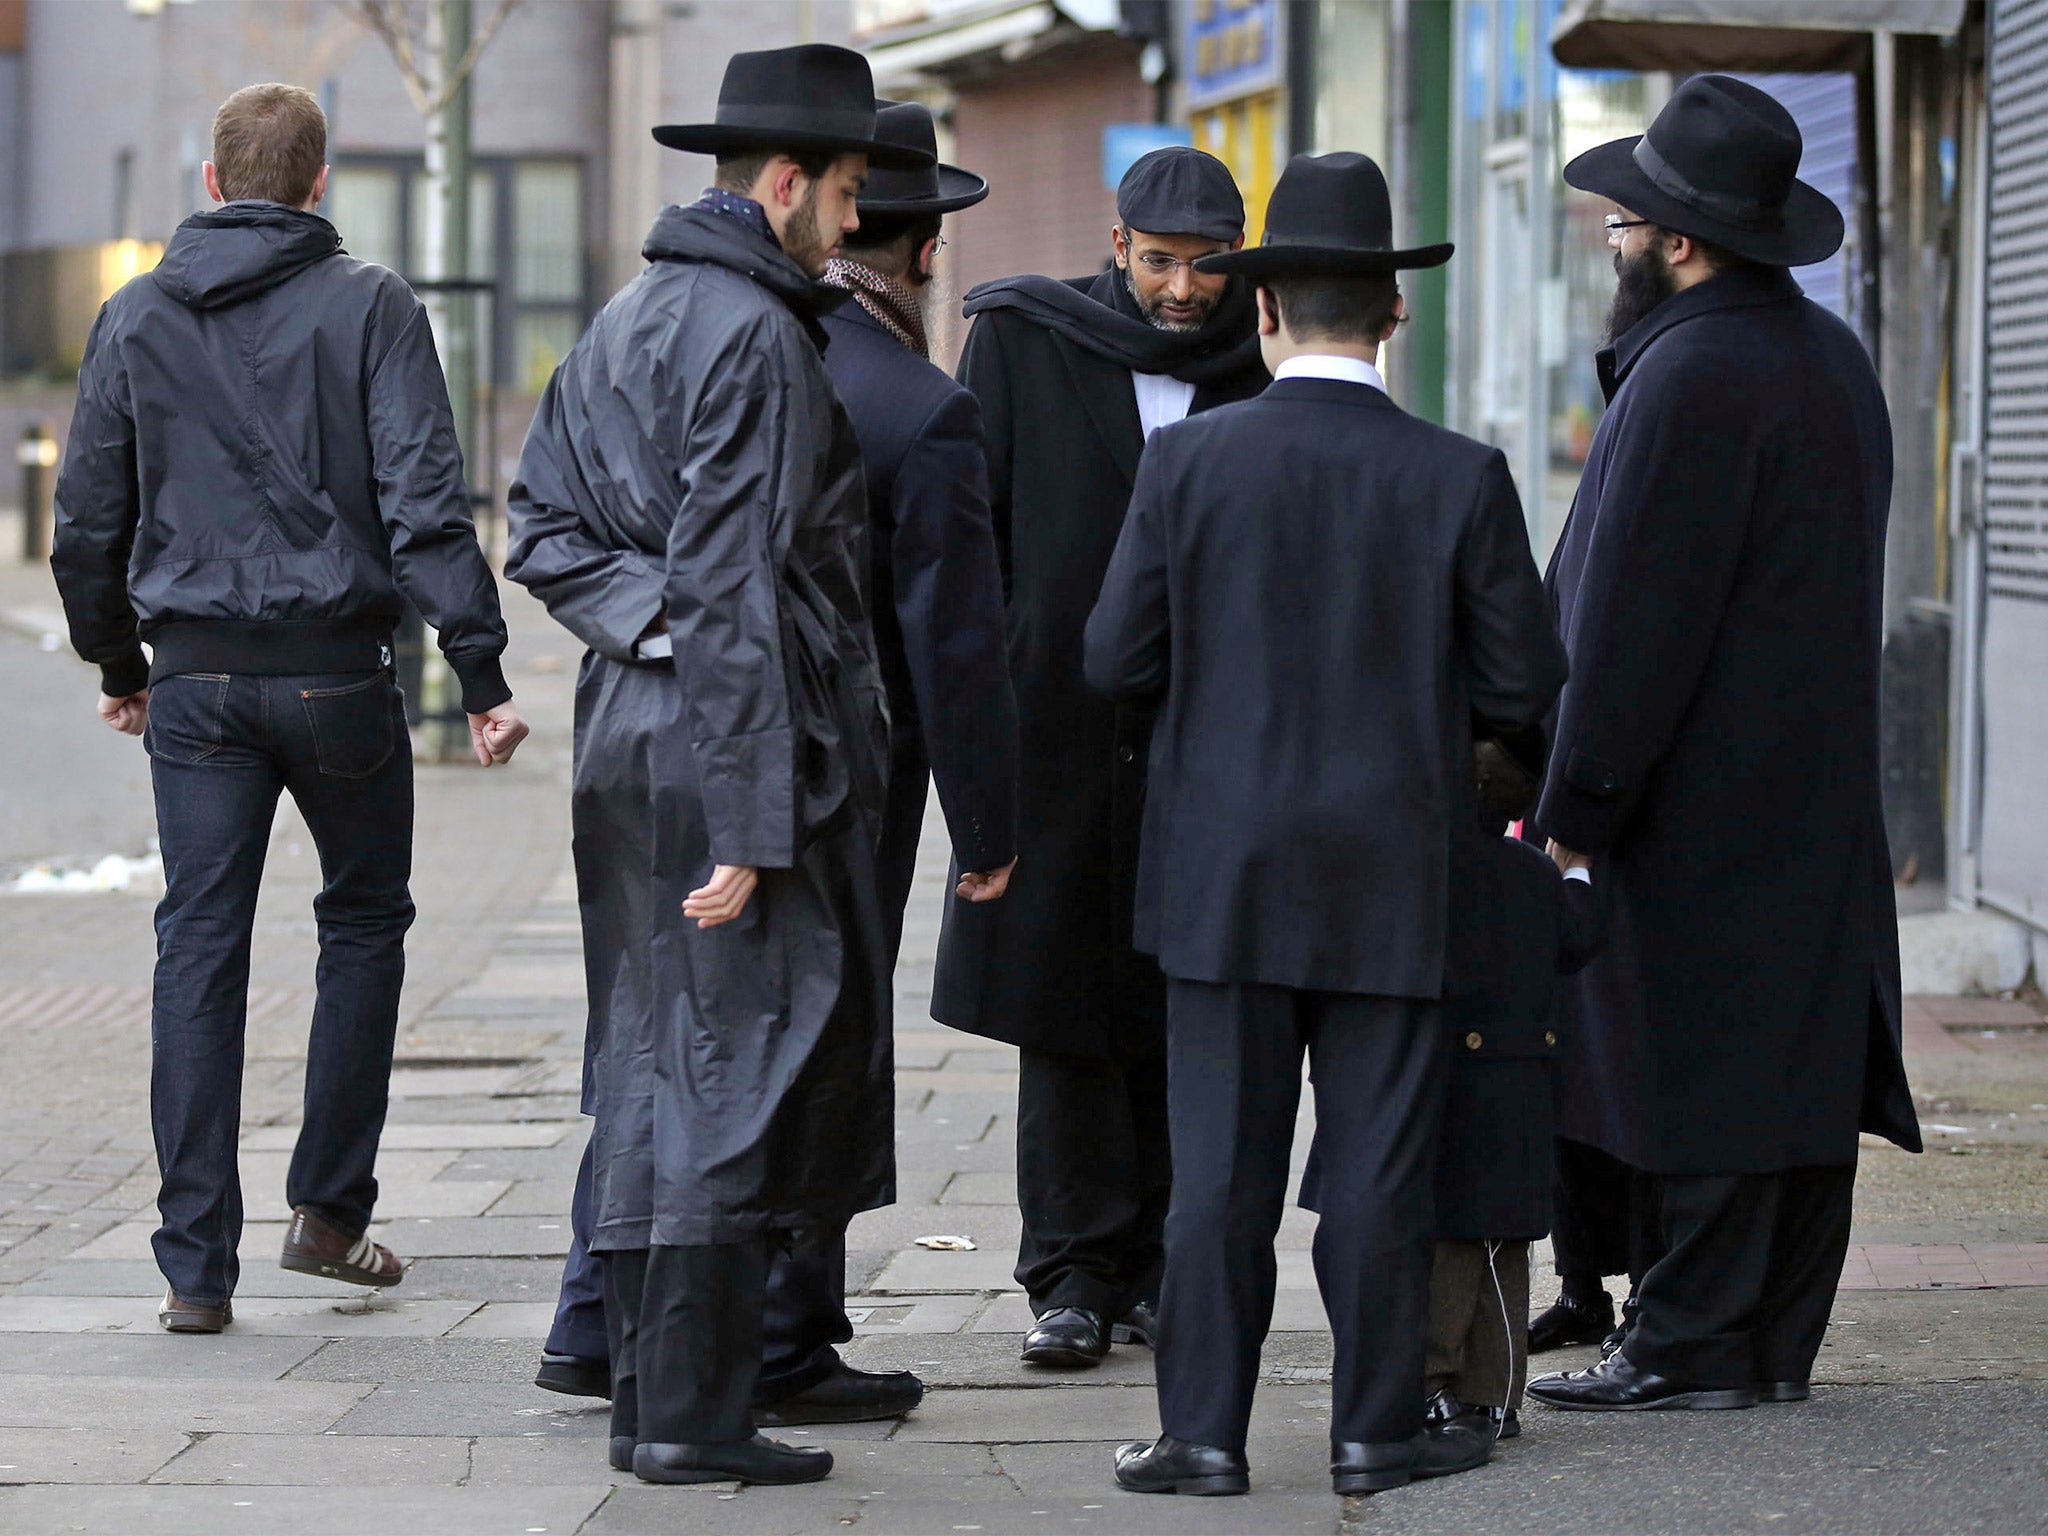 Golders Green, where Jewish neighbourhood watch patrols were stepped up this week